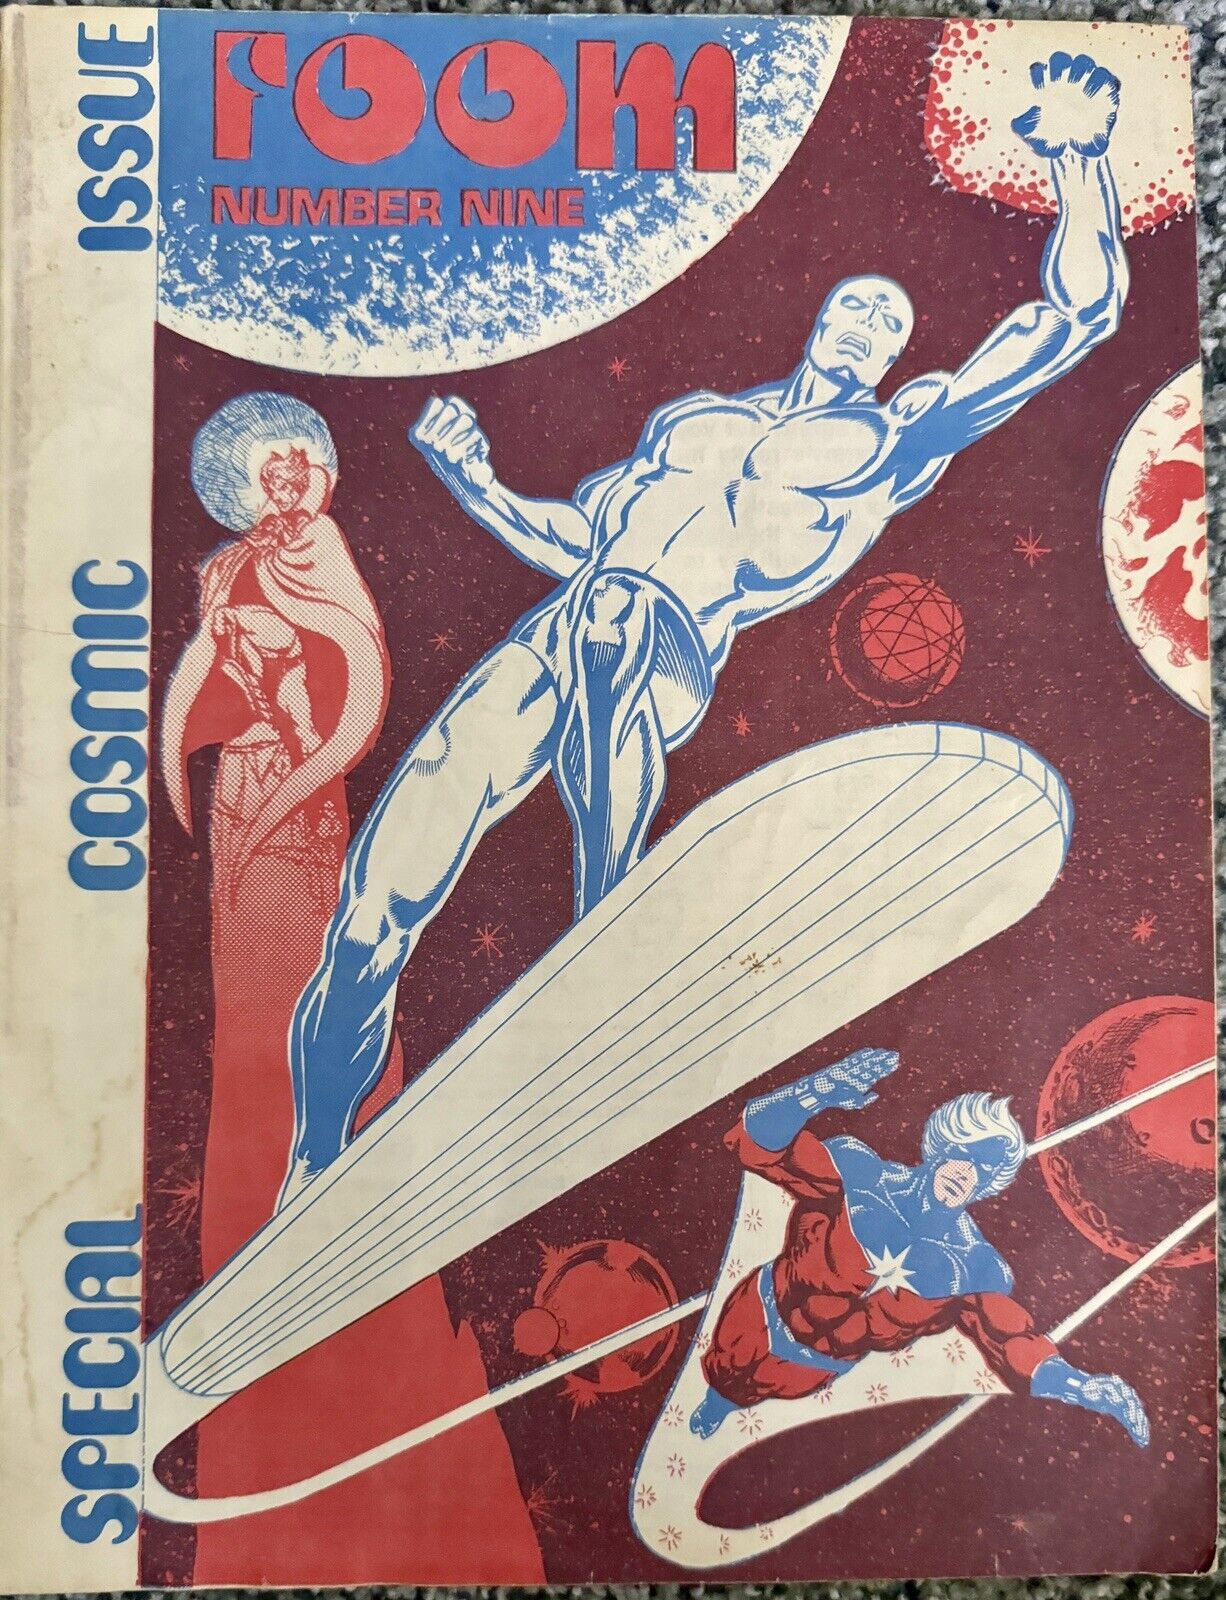 FOOM MAGAZINE #9 COSMIC ISSUE SILVER SURFER MARVEL COMICS 1975